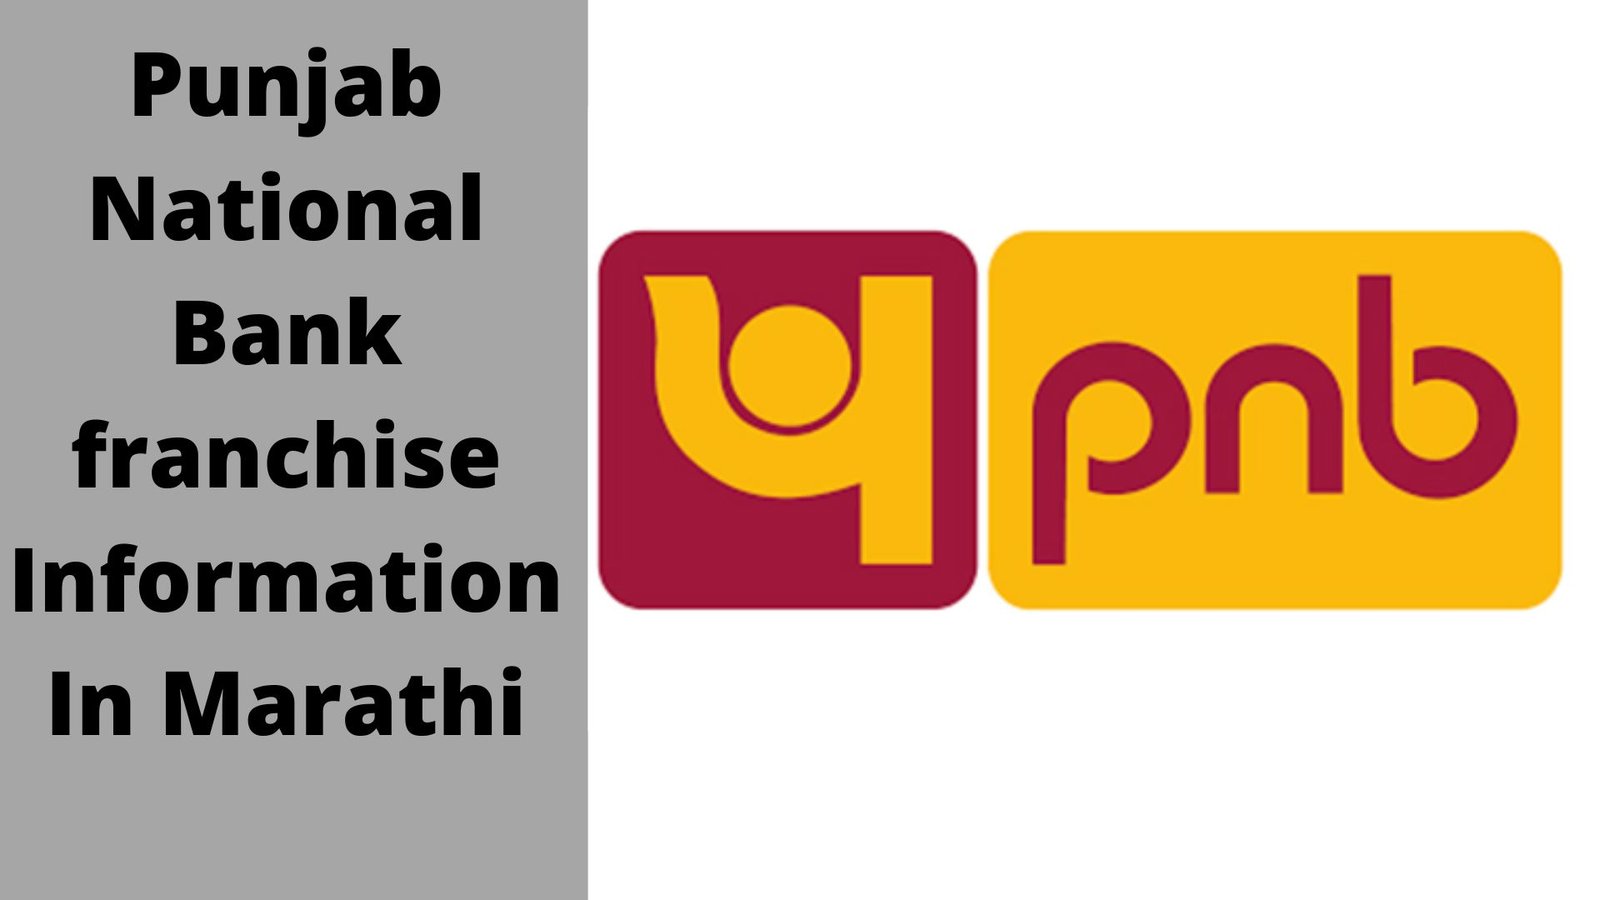 Punjab National Bank franchise Information In Marathi